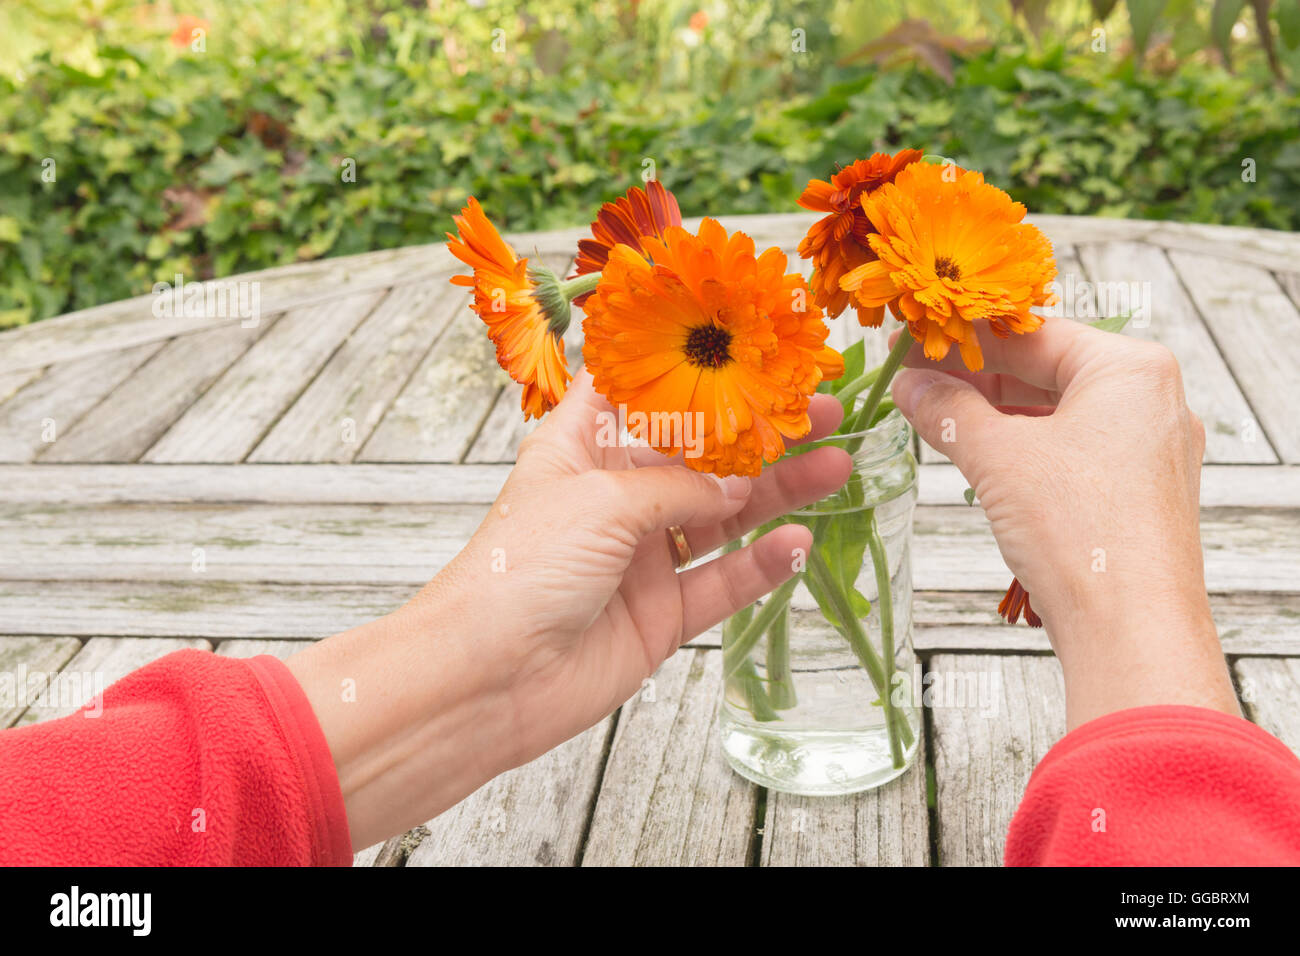 arranging pot marigolds in glass jam jar outside on garden table Stock Photo